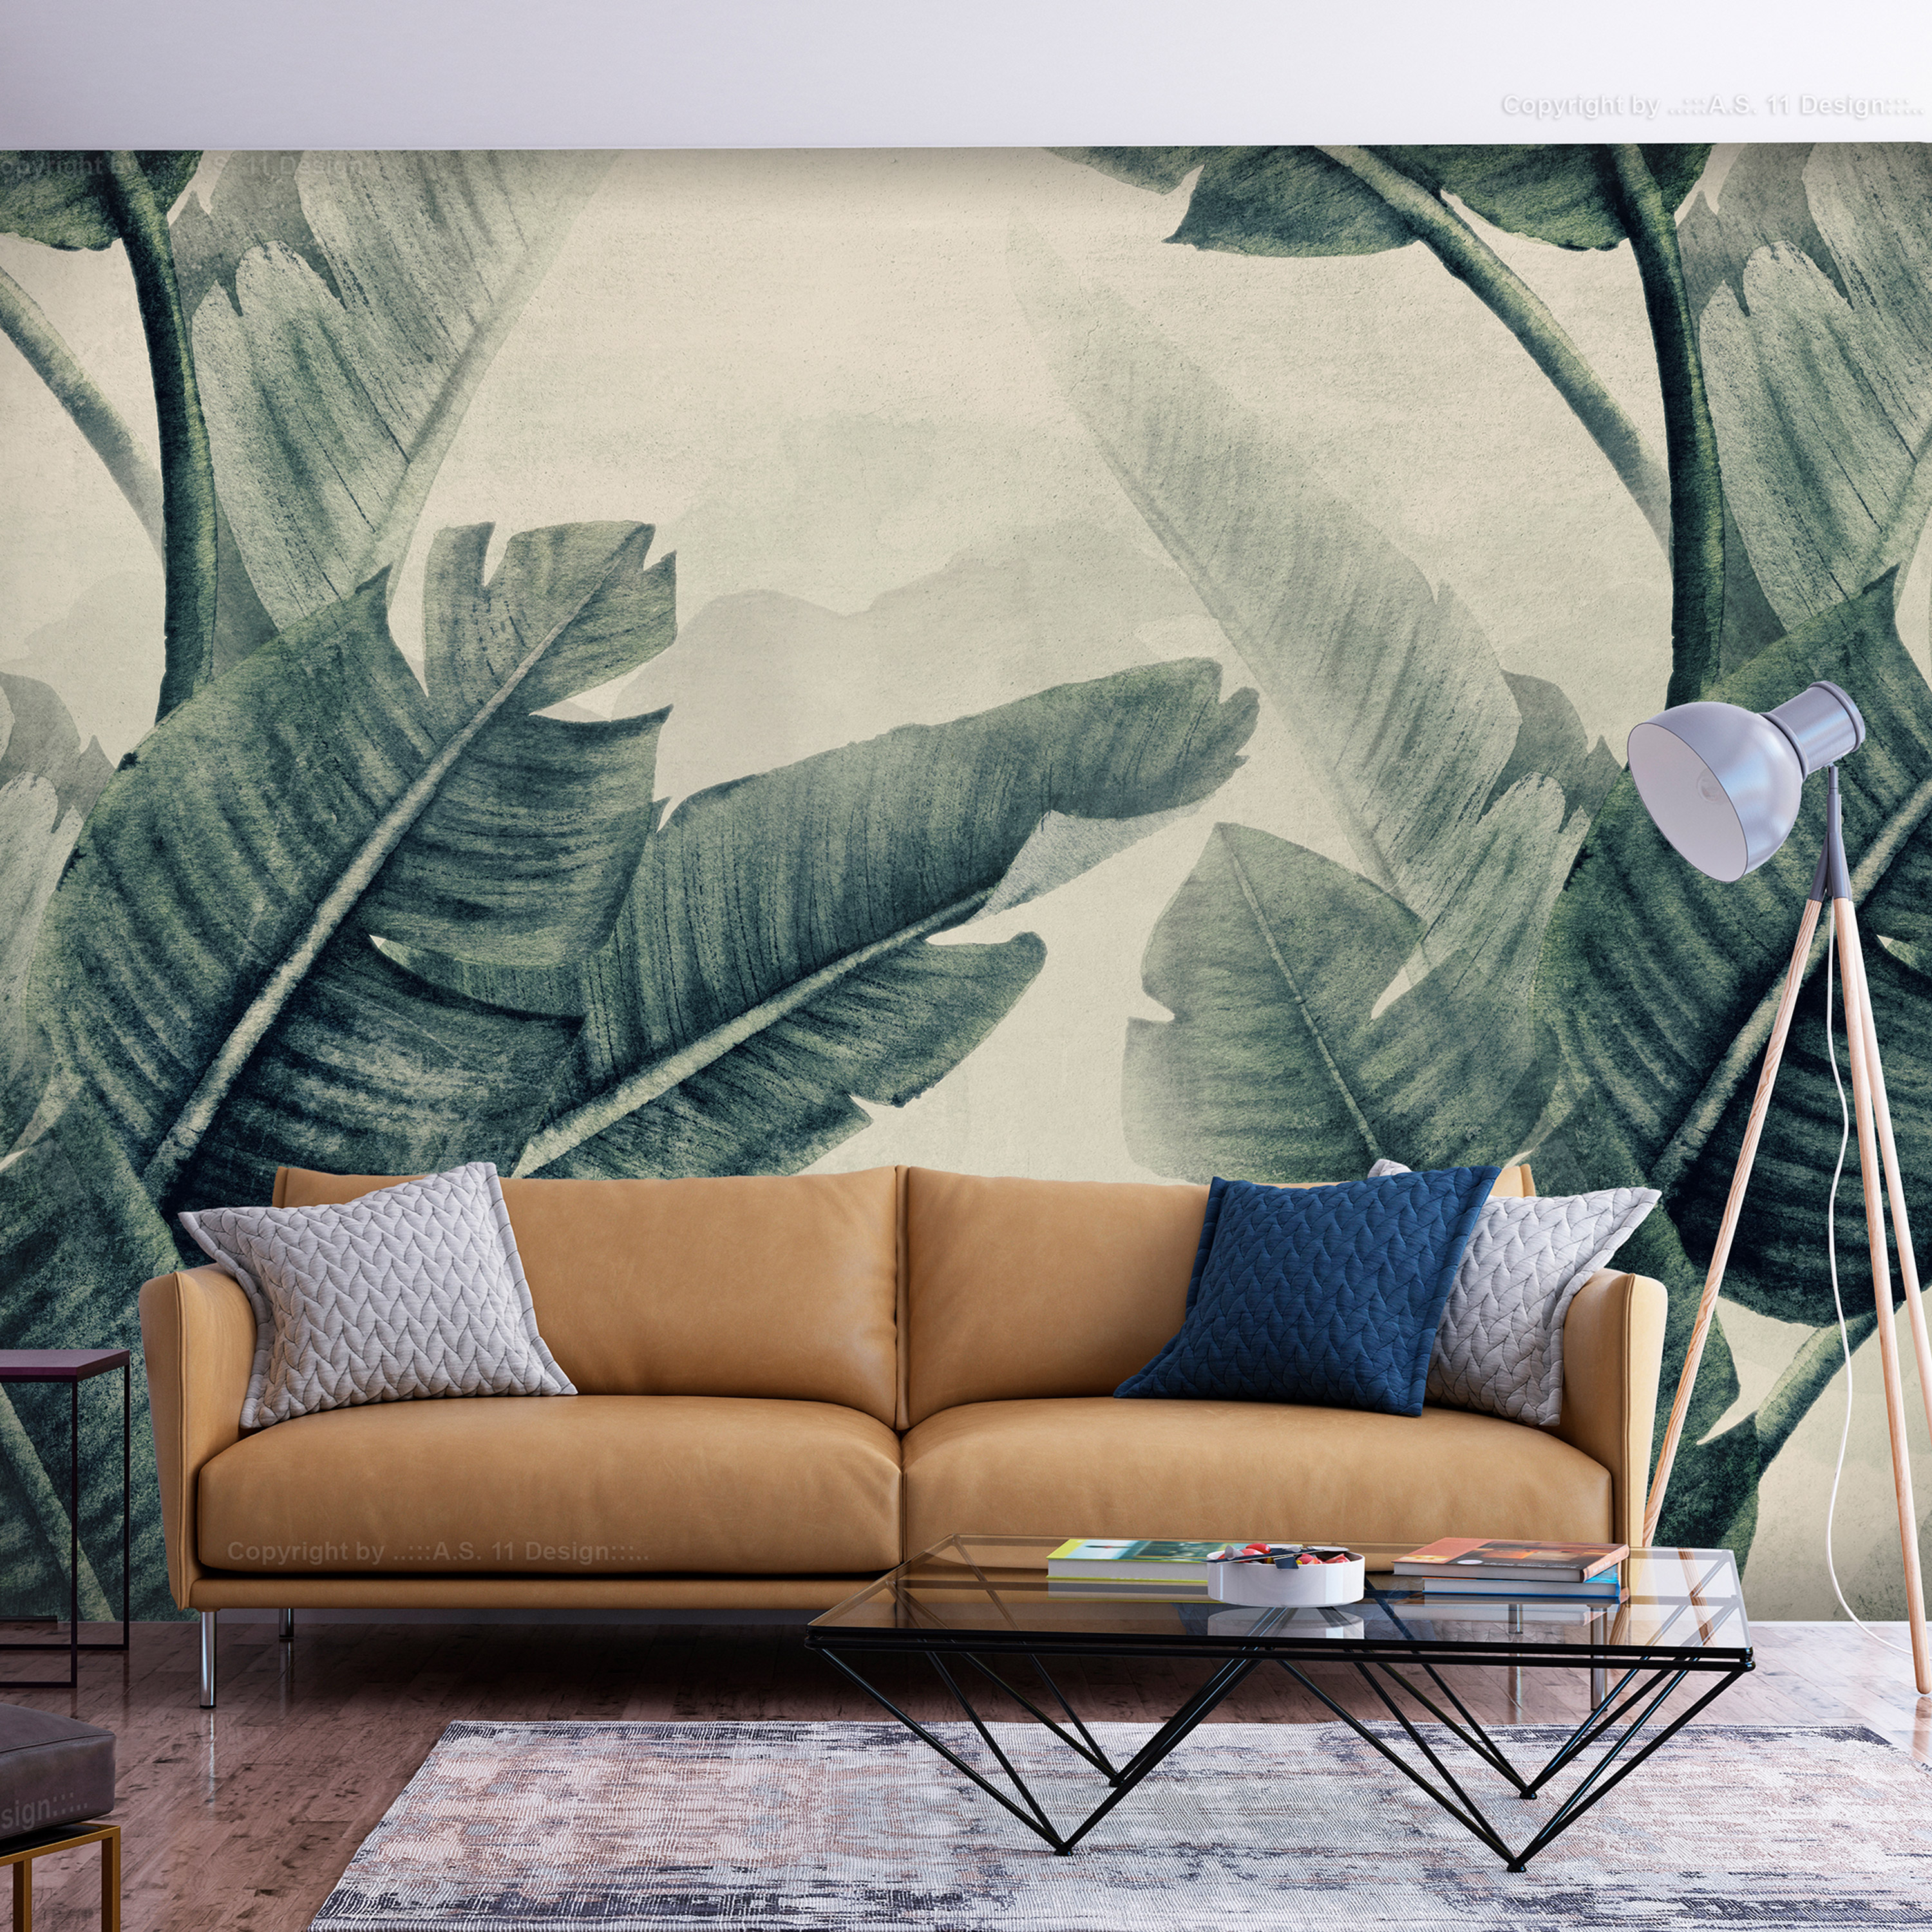 Self-adhesive Wallpaper - Magic Plants - First Variant - 98x70